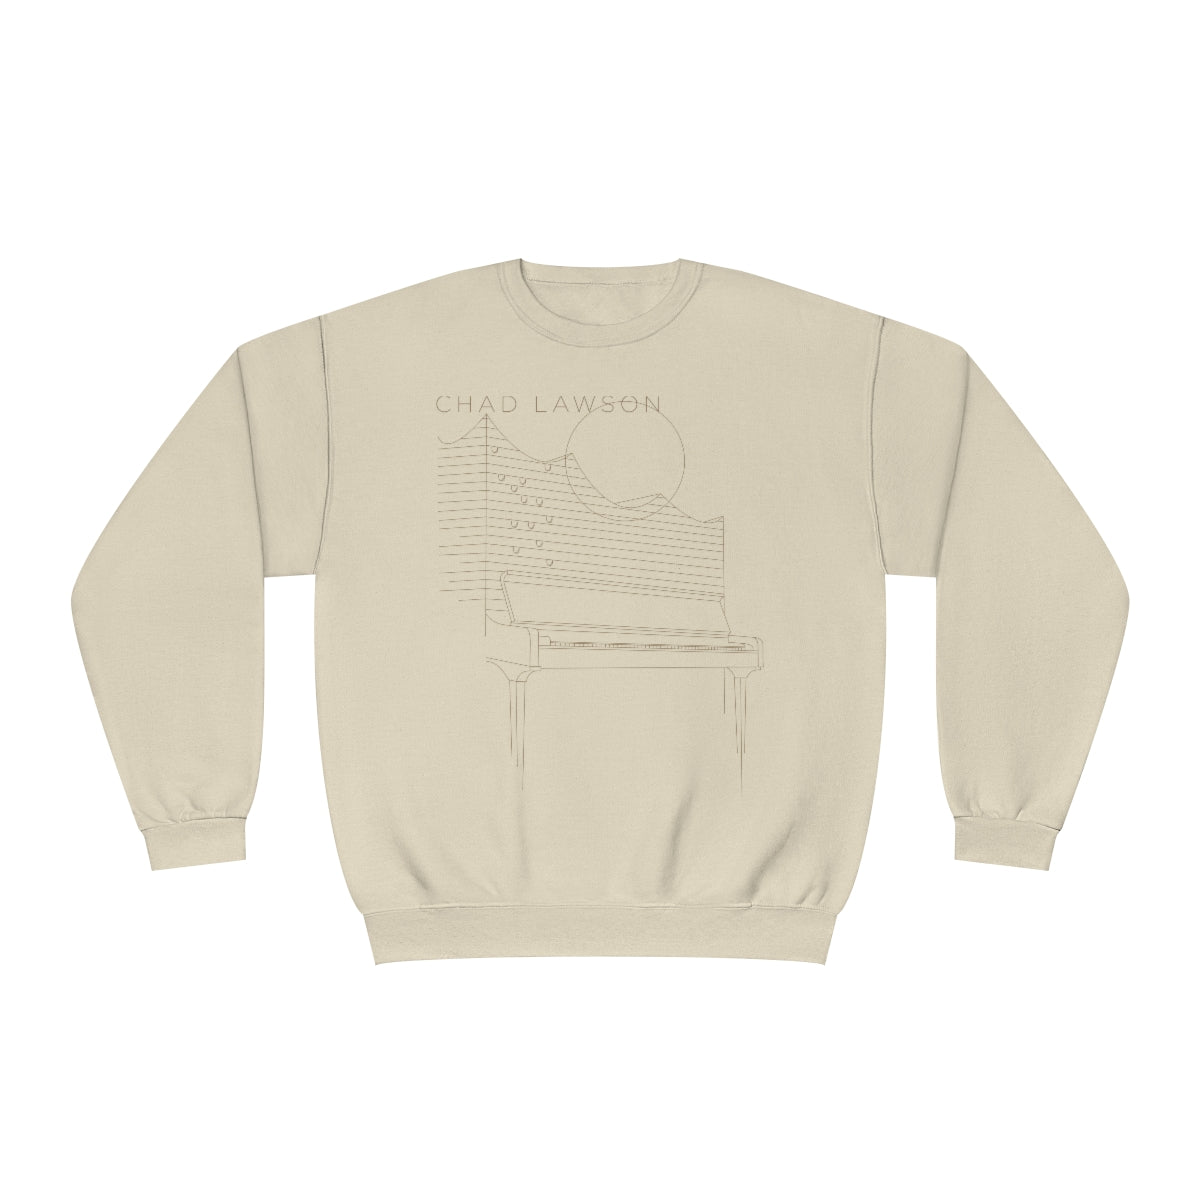 Elbphilharmonie Limited Edition - Crewneck Sweatshirt - Sandstone